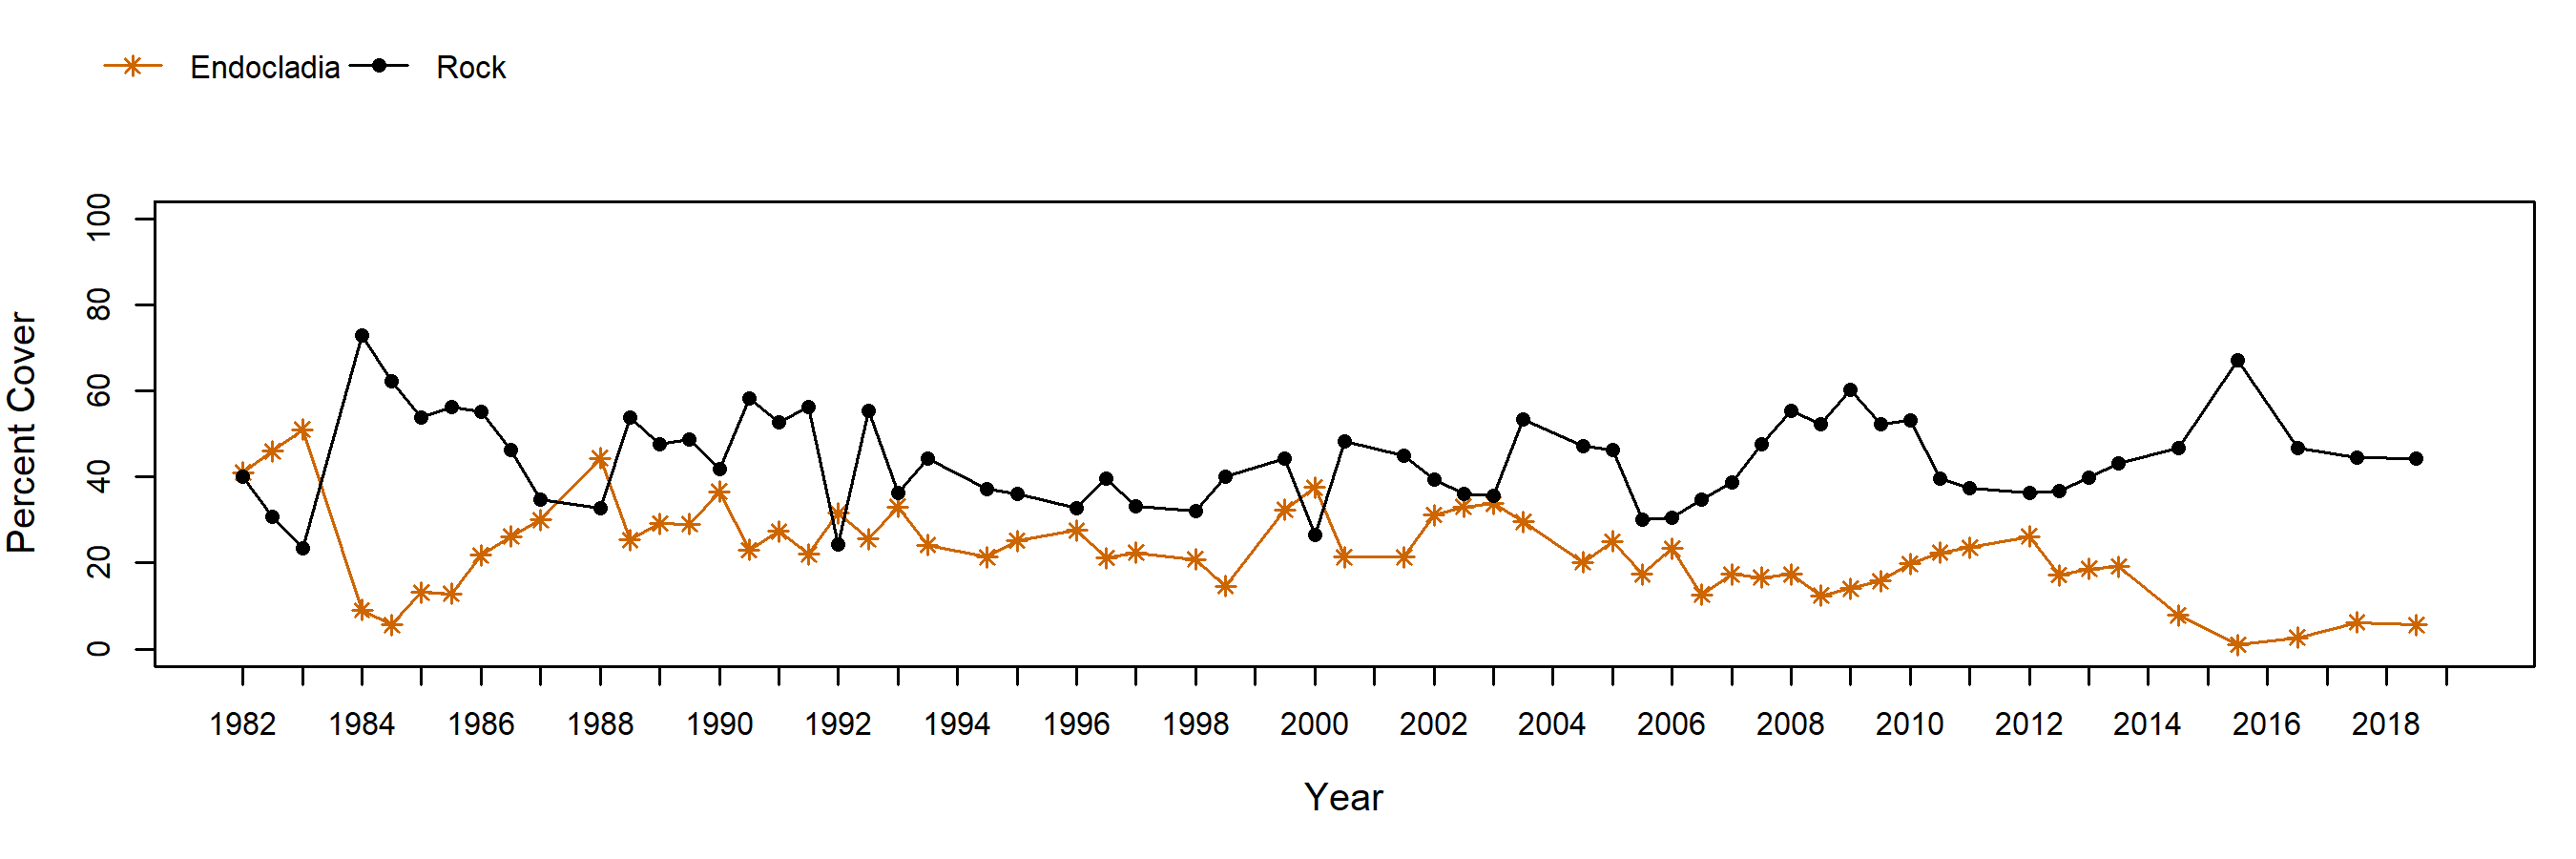 Middle West Endocladia trend plot